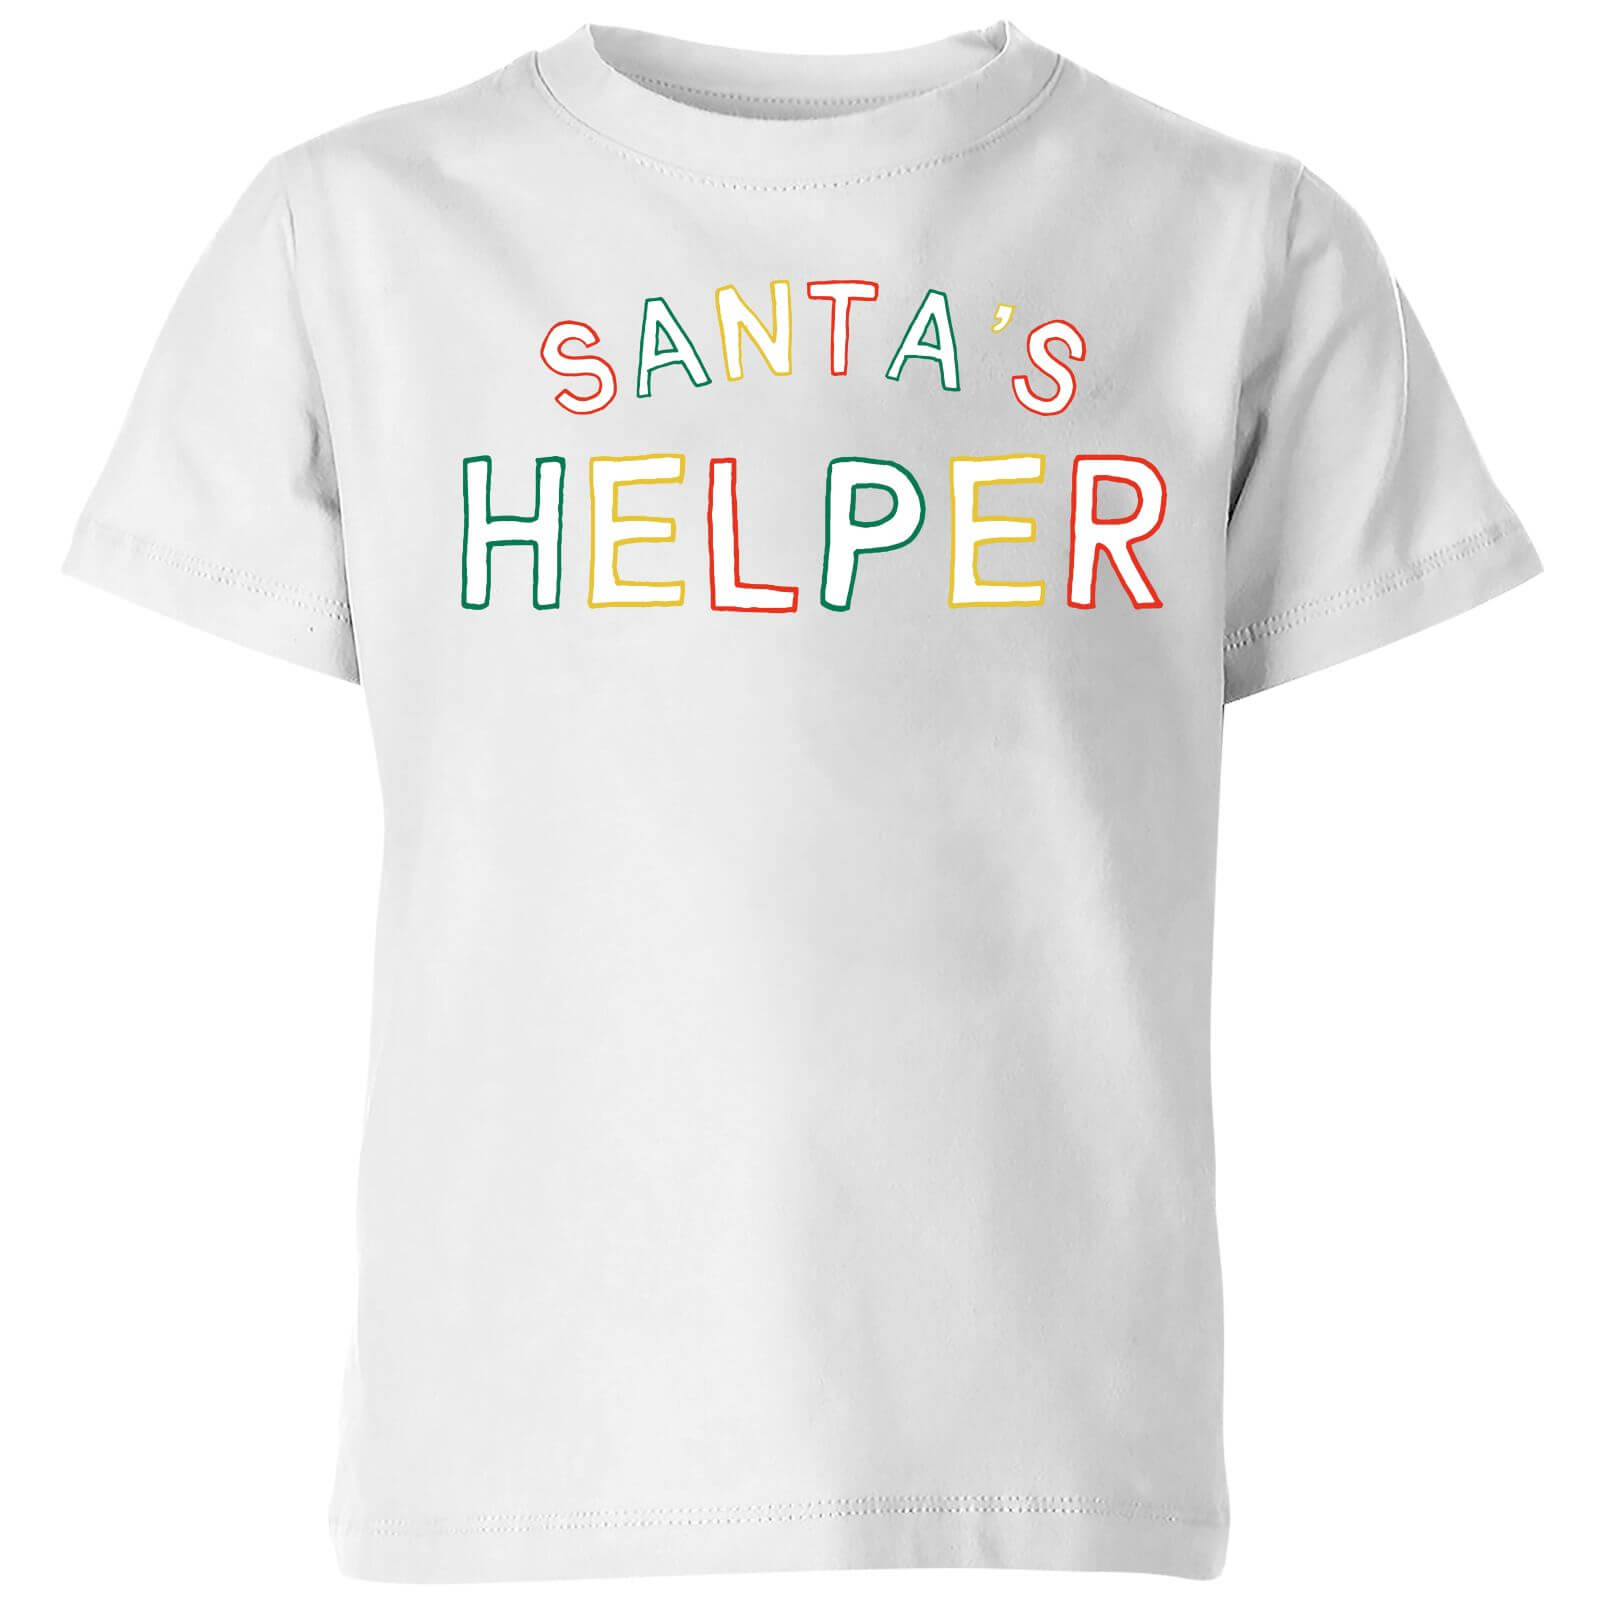 Santa's Helper Kids' T-Shirt - White - 3-4 Years - White